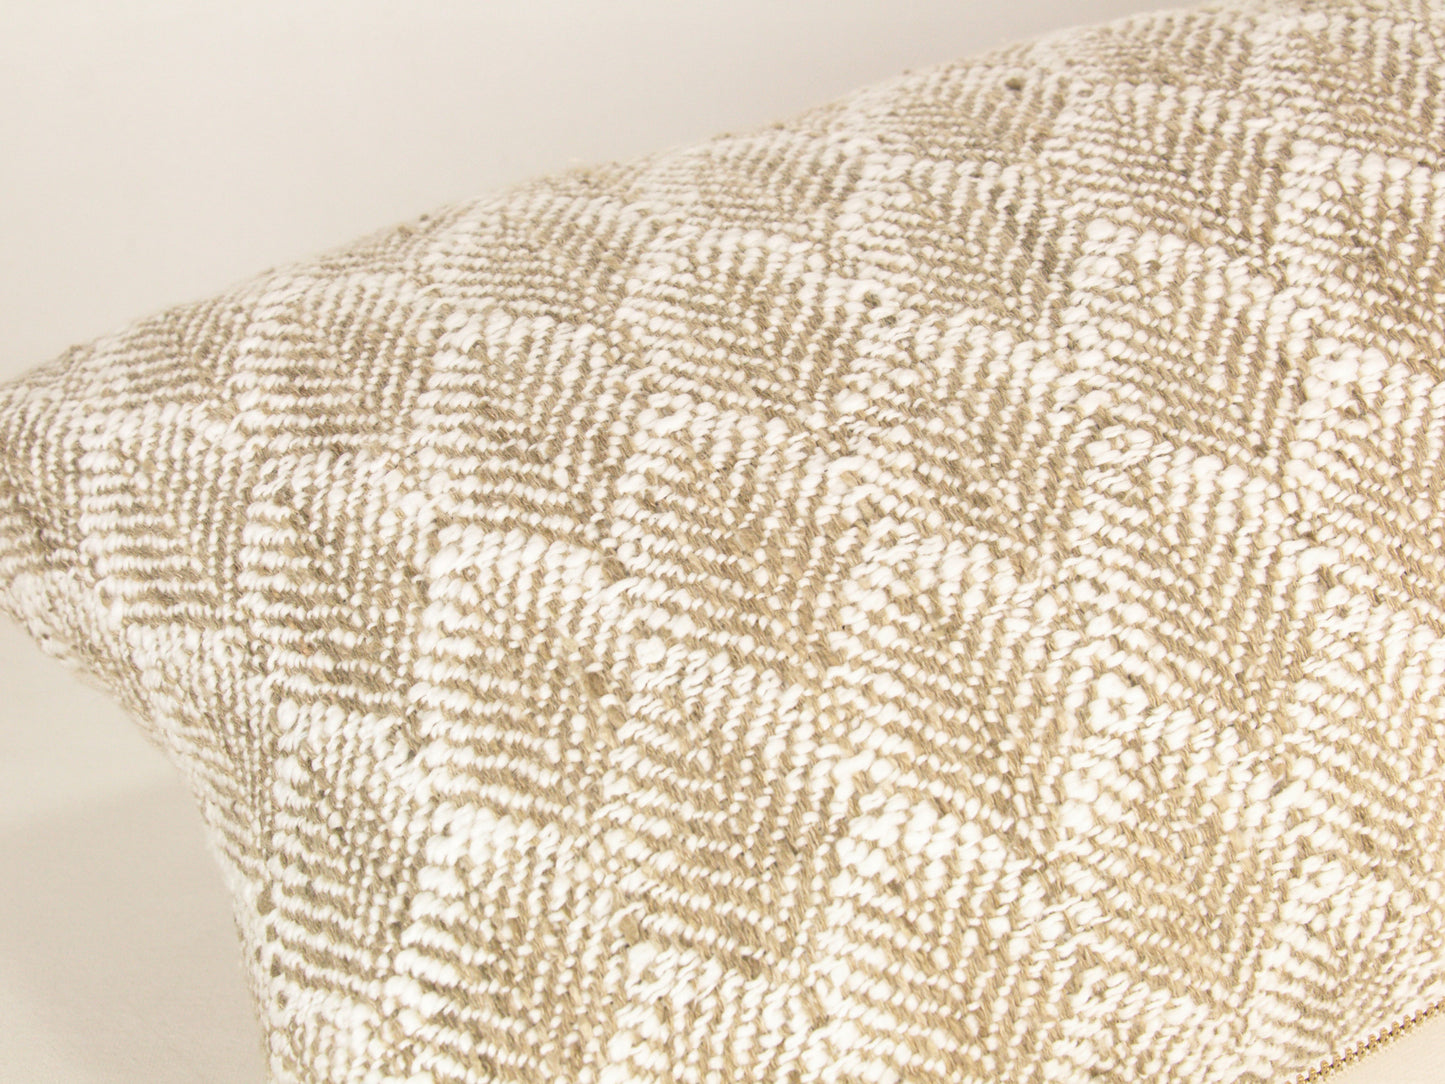 Beige, Tan & White Organic Leaf Pillow Cover, 20x20"